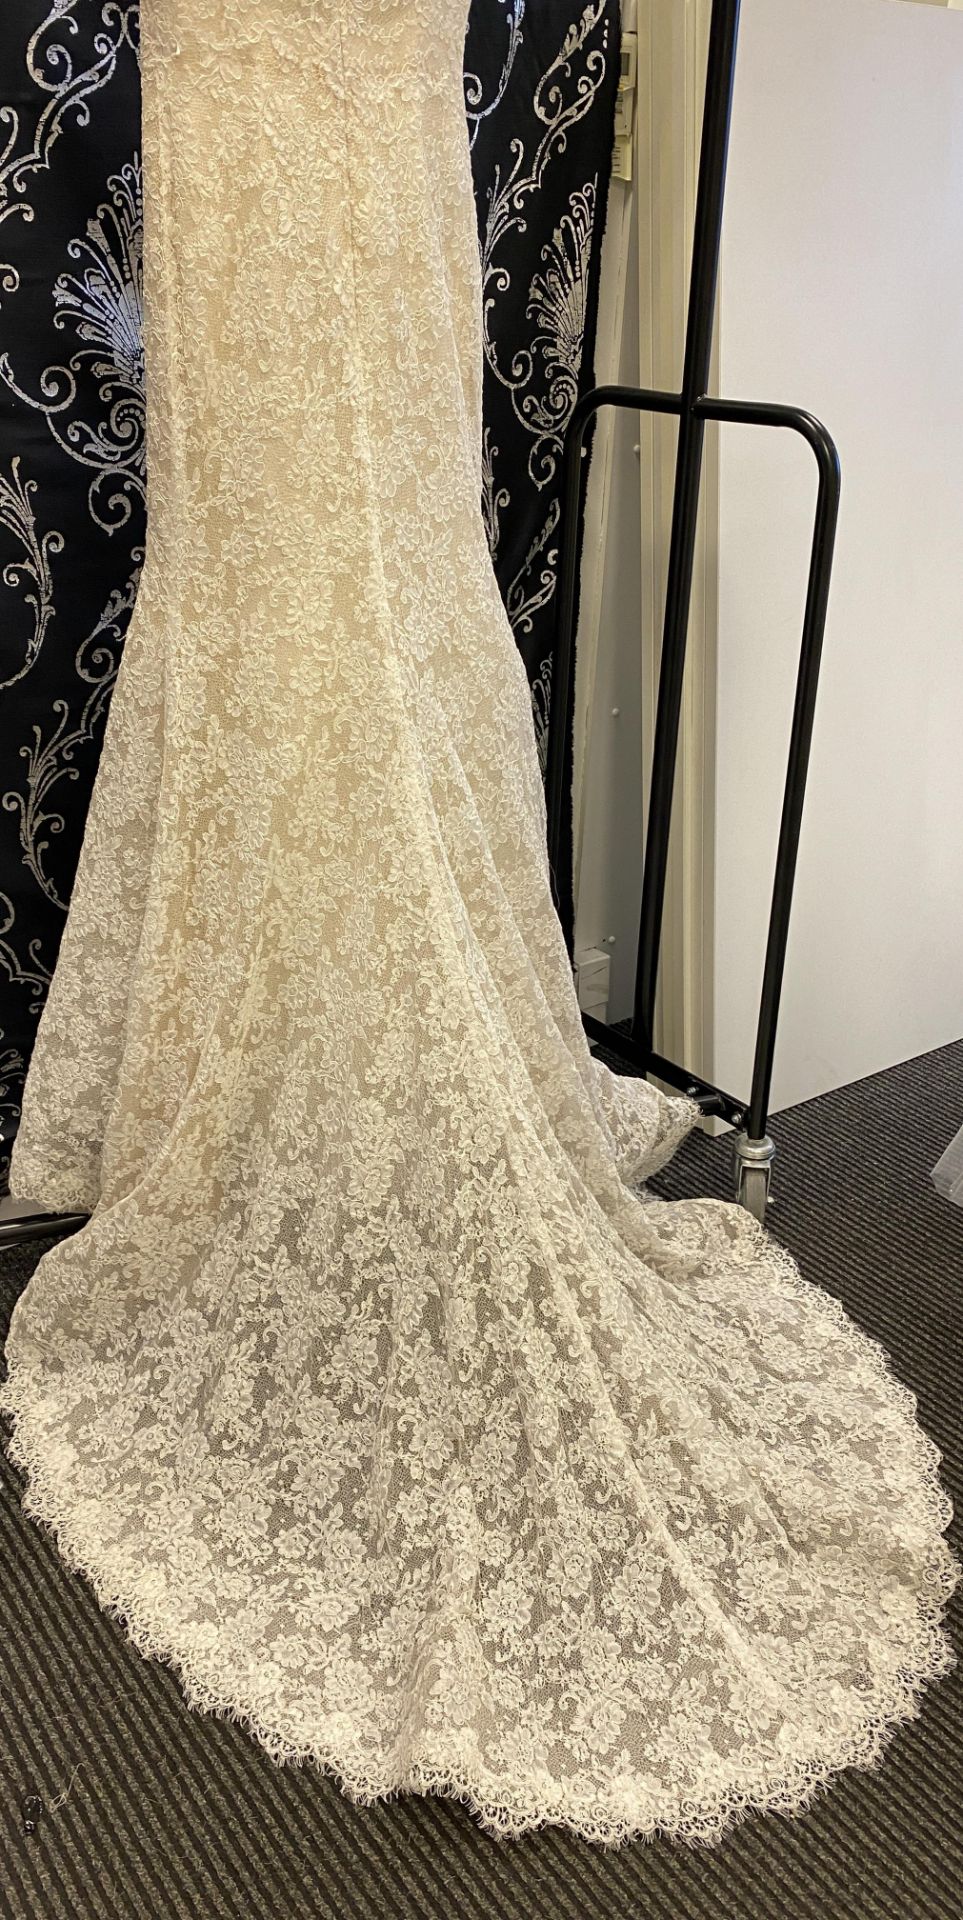 1 x ANNA SUL Y 'White Rose' Full Lace Mermaid Style Designer Wedding Dress RRP £1,250 - Image 7 of 11